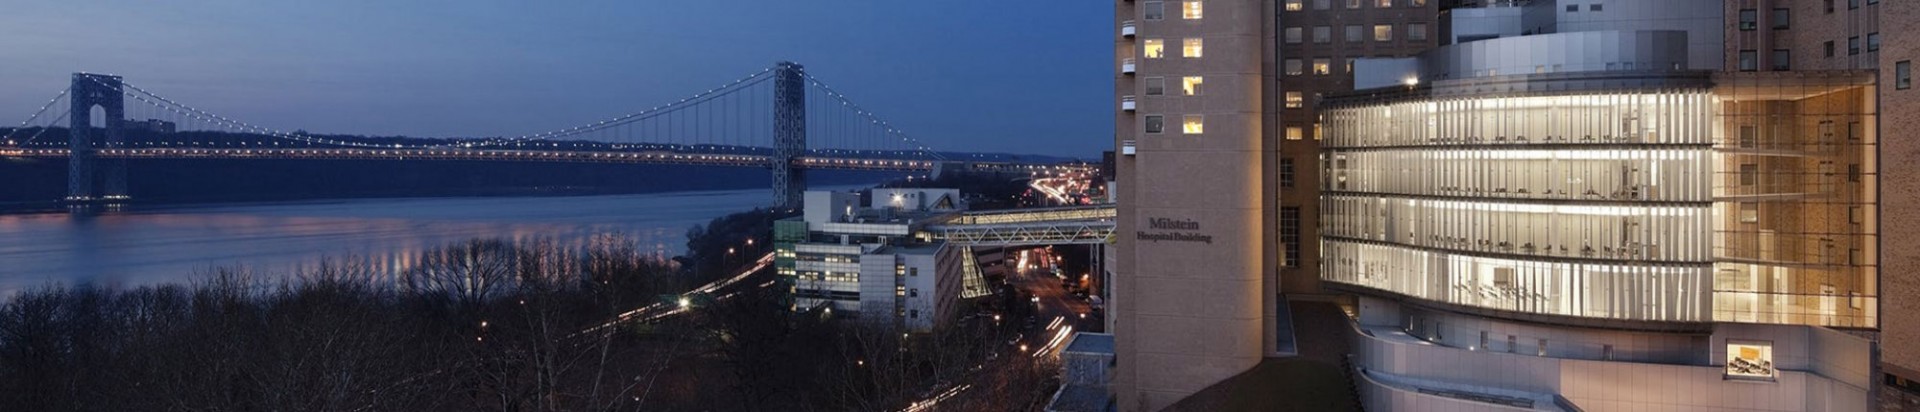 Milstein Hospital and the George Washington Bridge